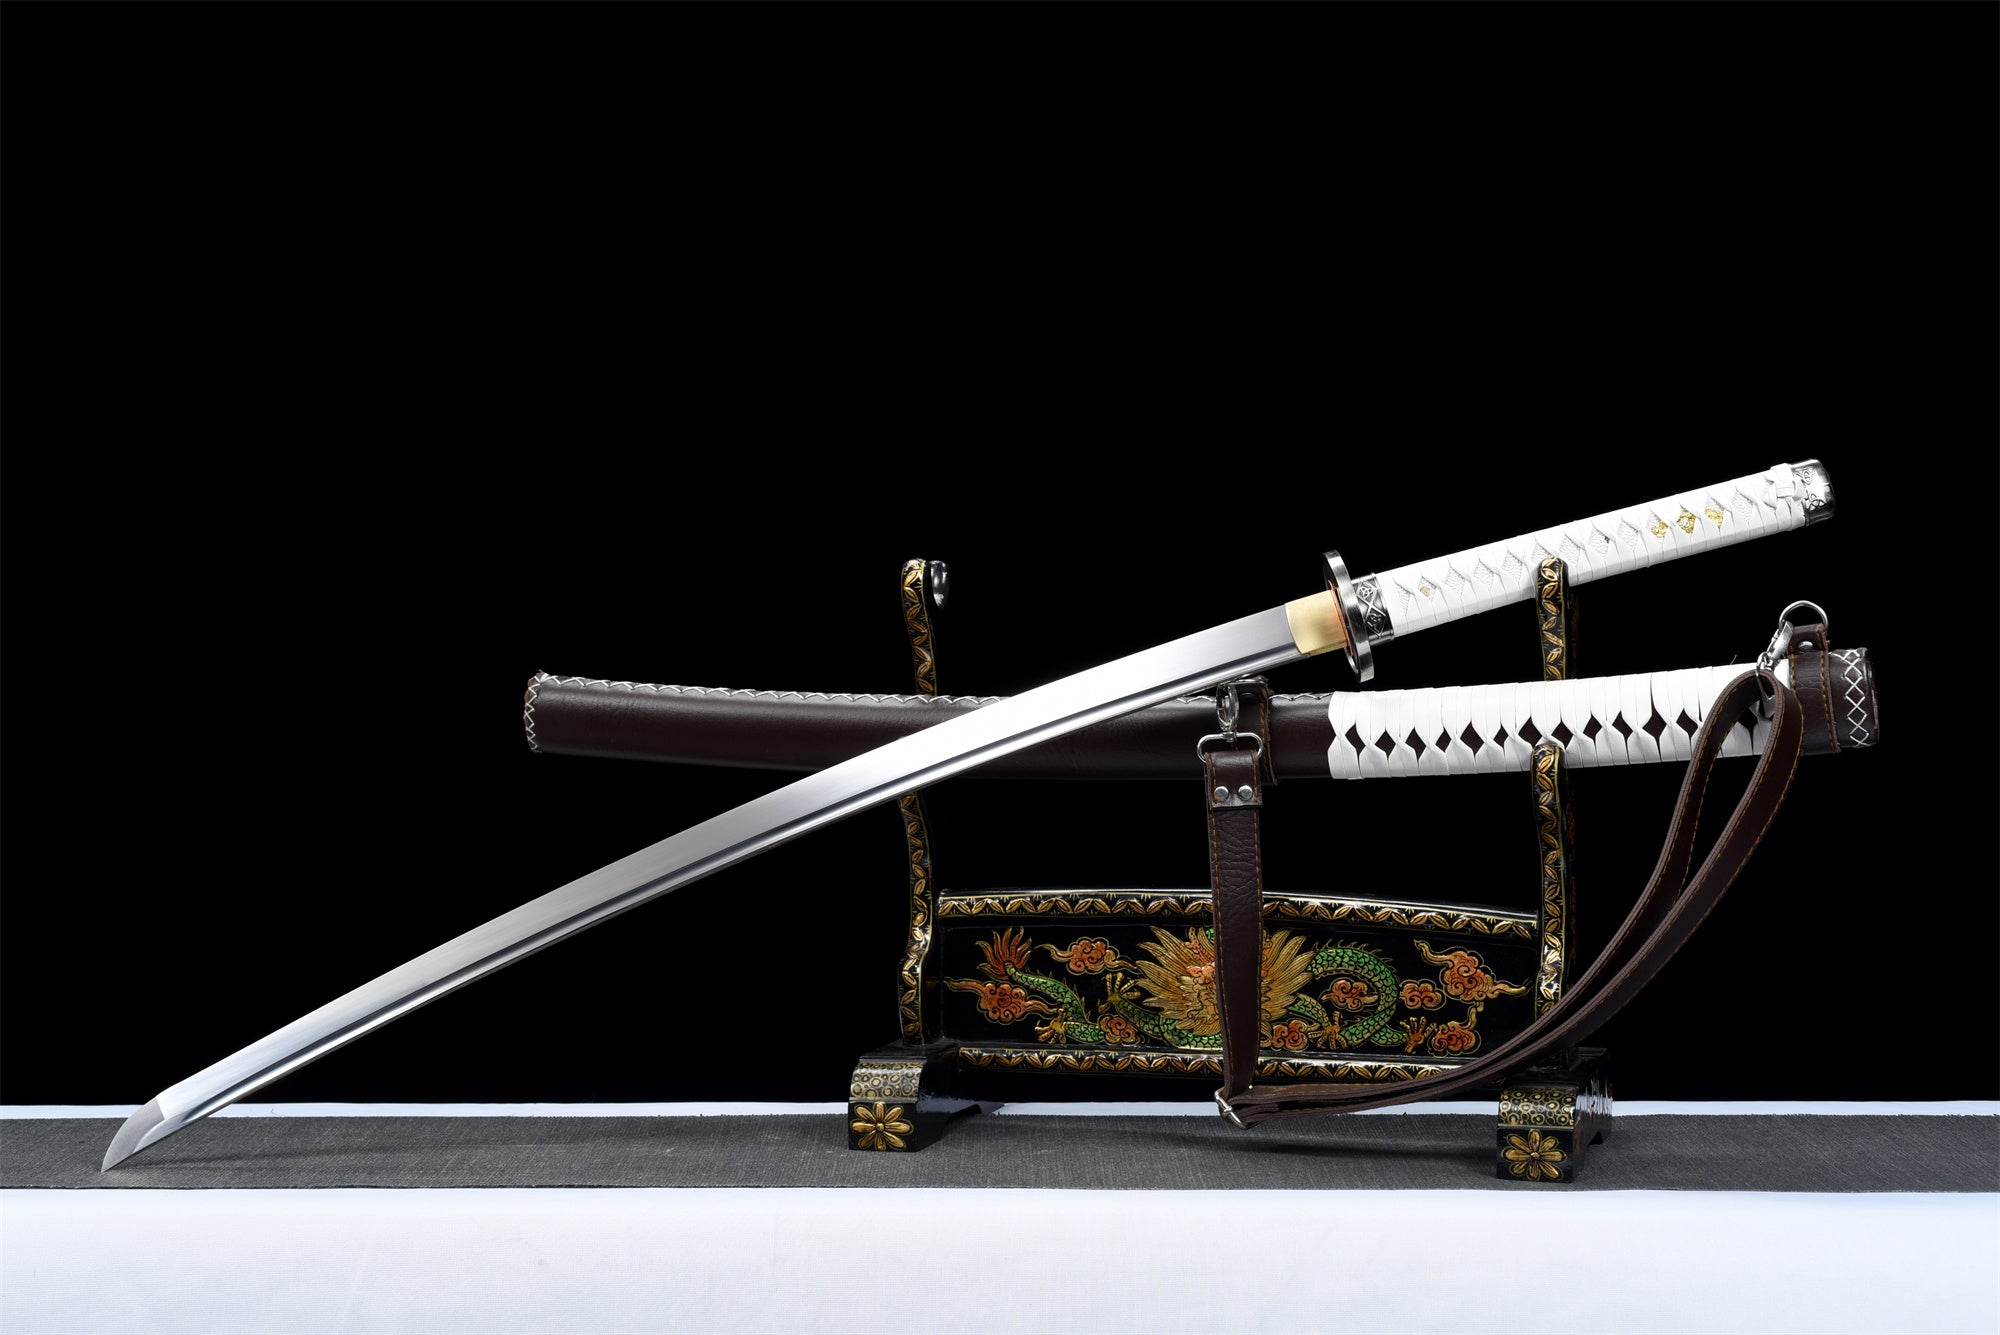 The Walking Dead: Michonne katana,Japanese katana,Real Handmade Samurai Sword,High Manganese Steel